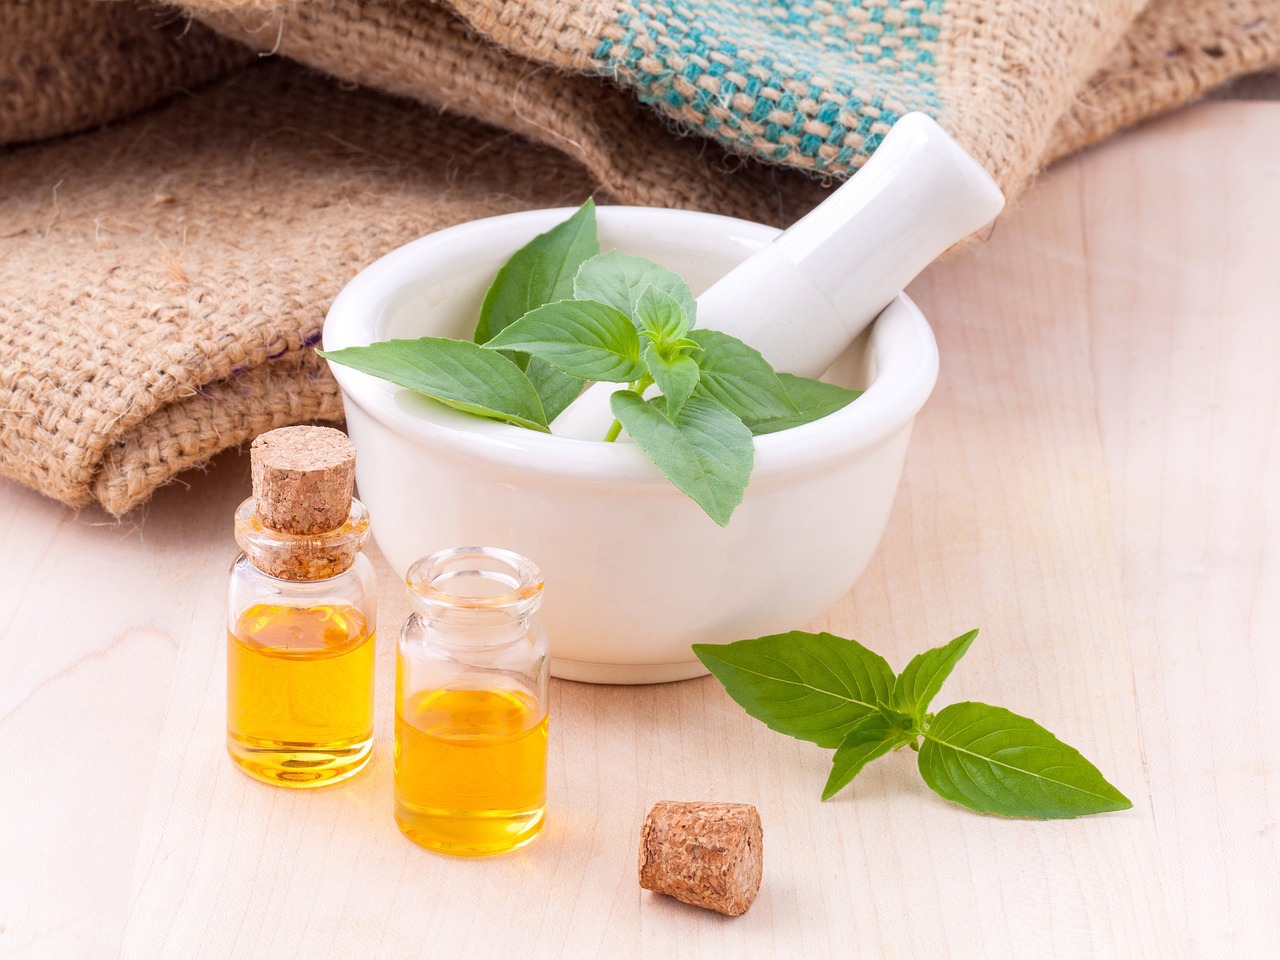 Where do essential oils come from